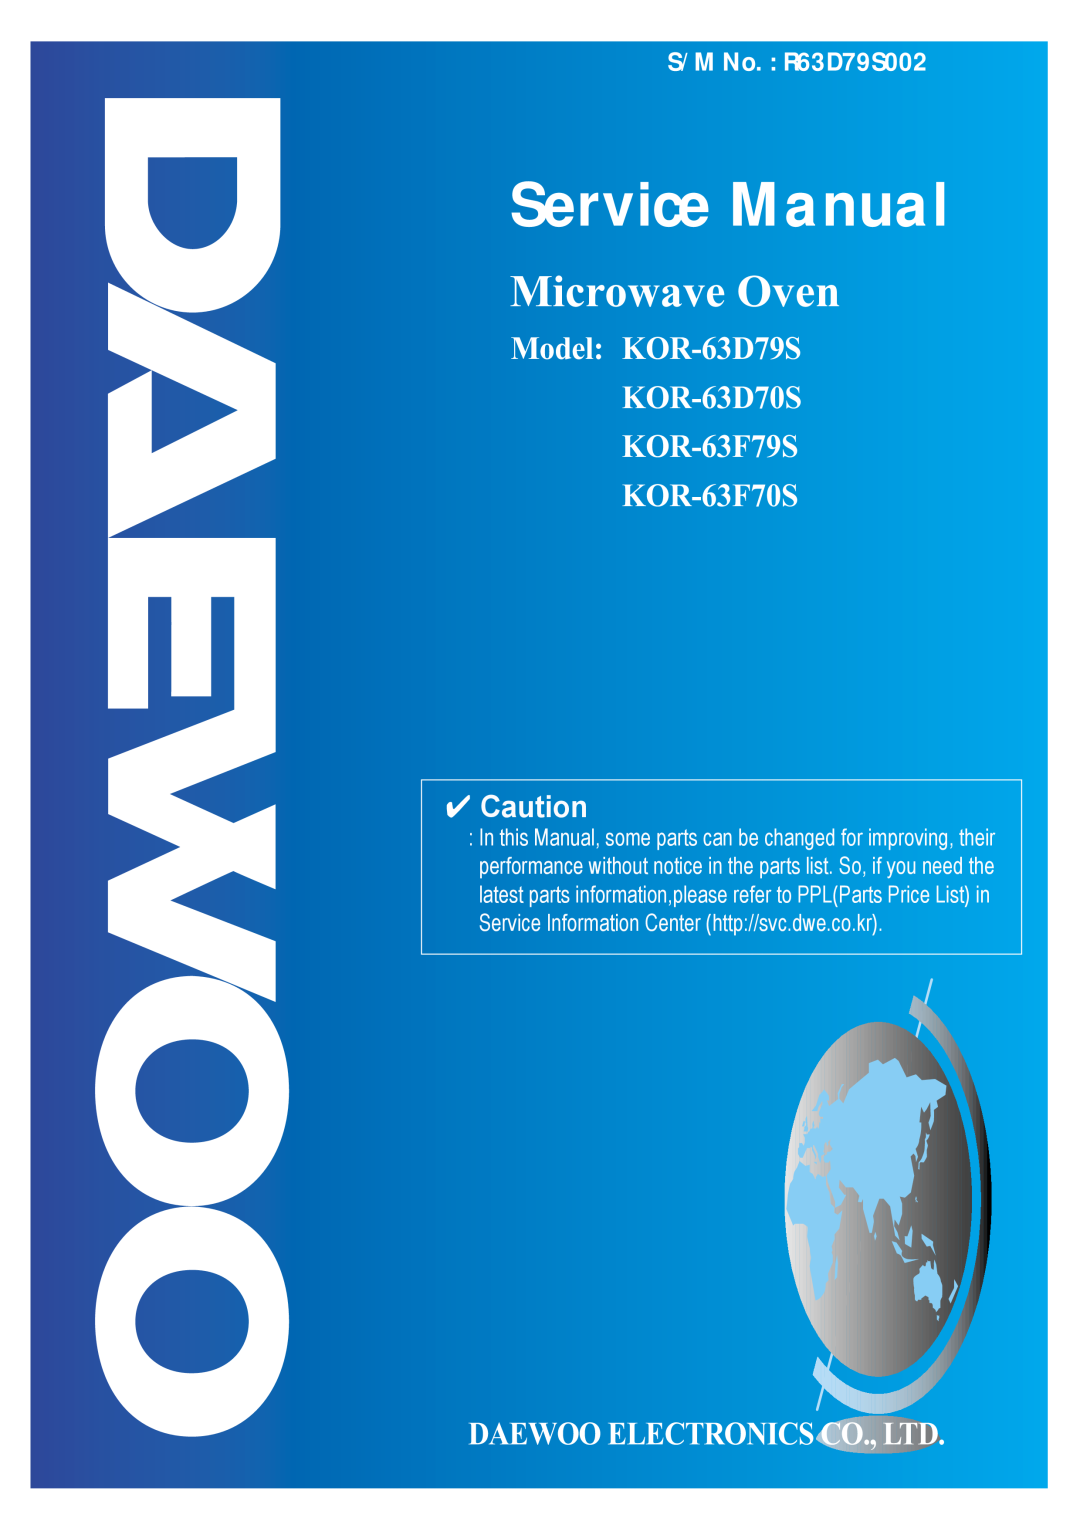 Daewoo service manual Microwave Oven, Model KOR-63D79S KOR-63D70S KOR-63F79S, KOR-63F70S, S/M No. R63D79S002 